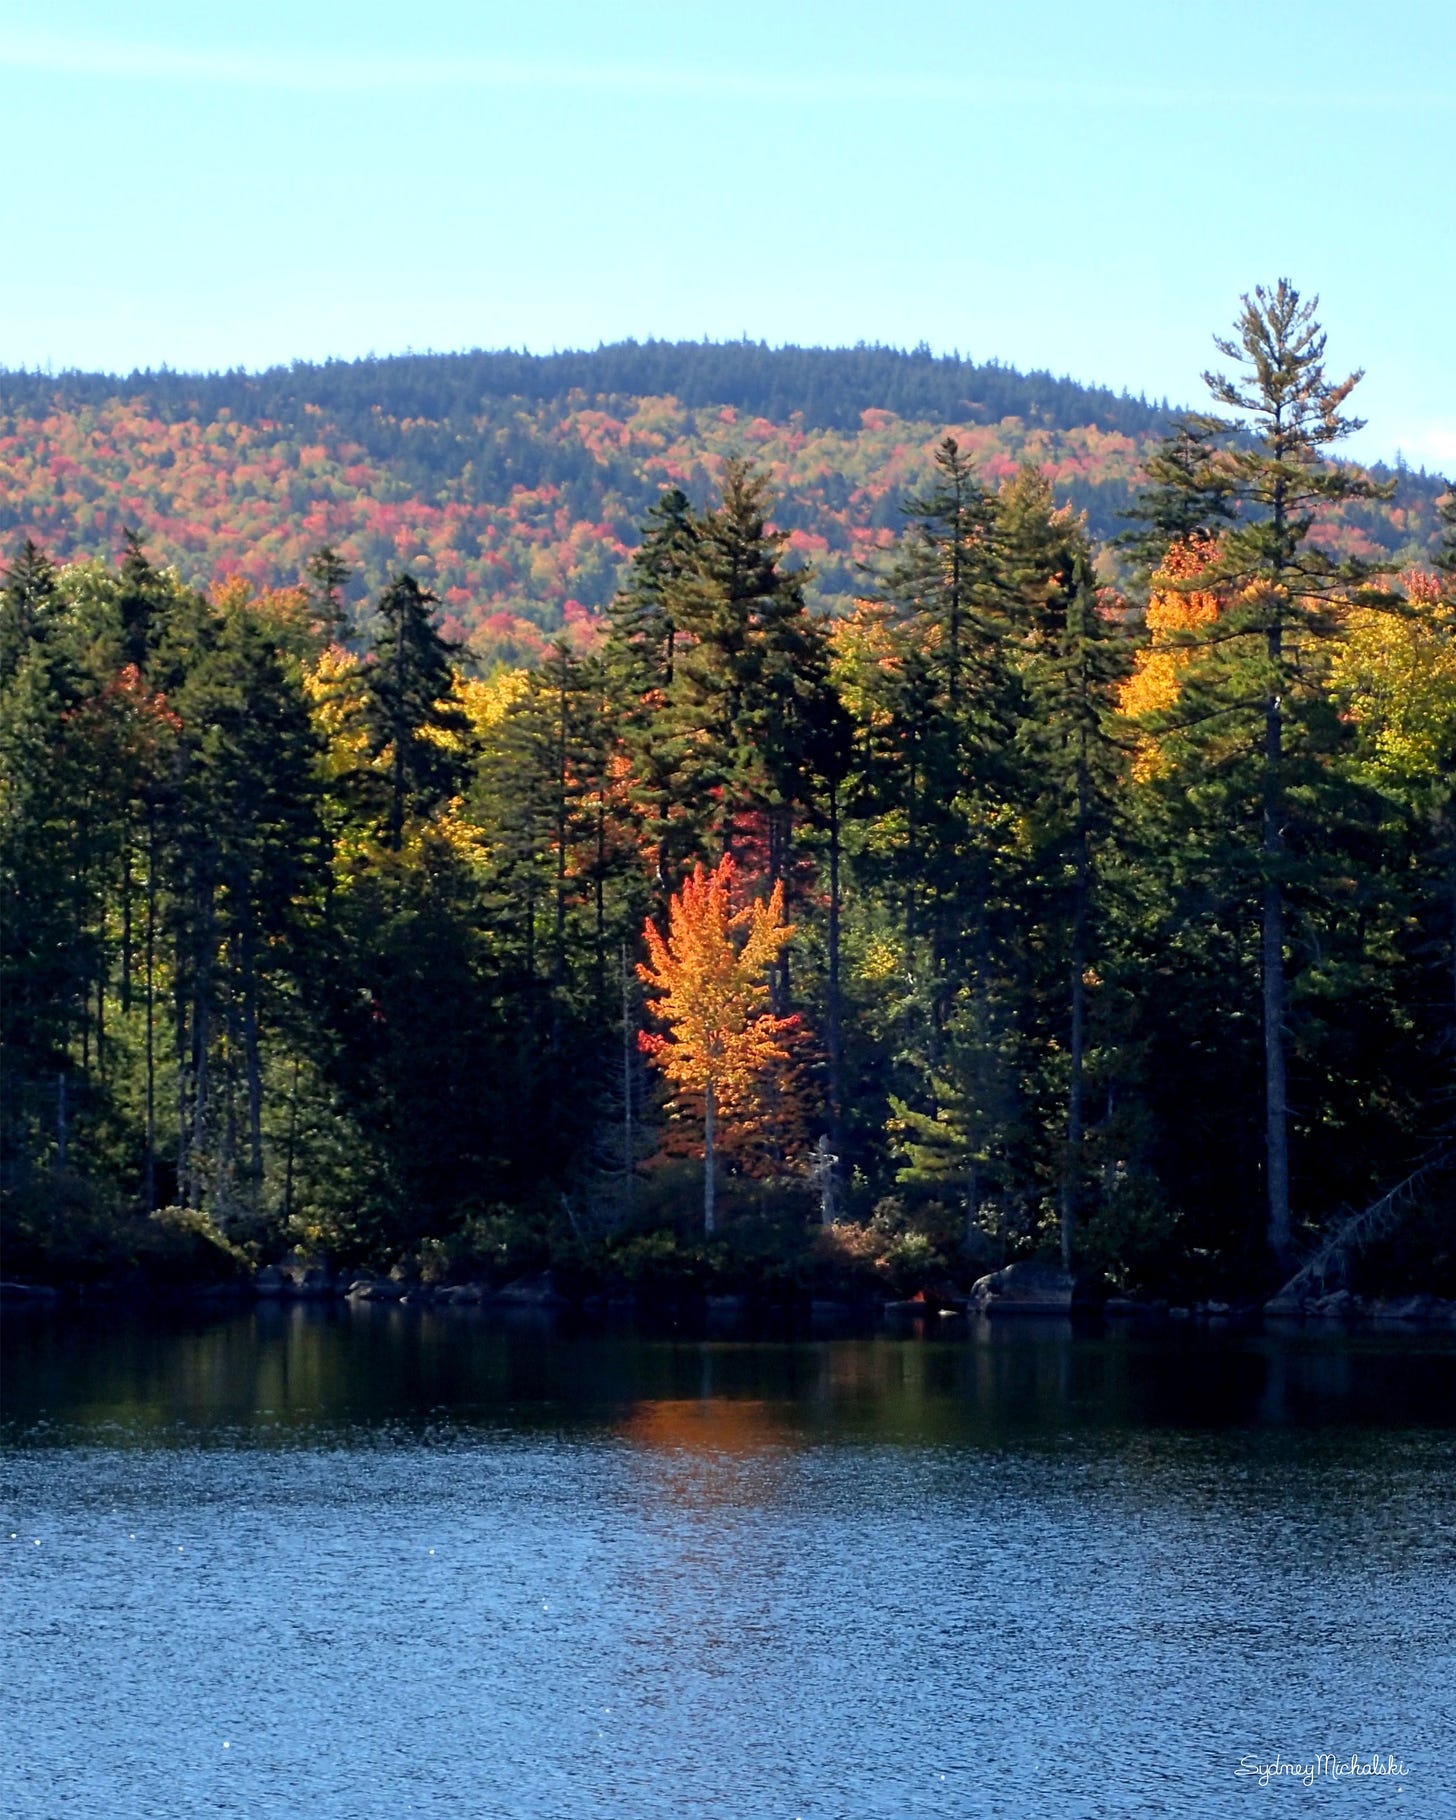 Fall foliage colors the shores of a blue lake.